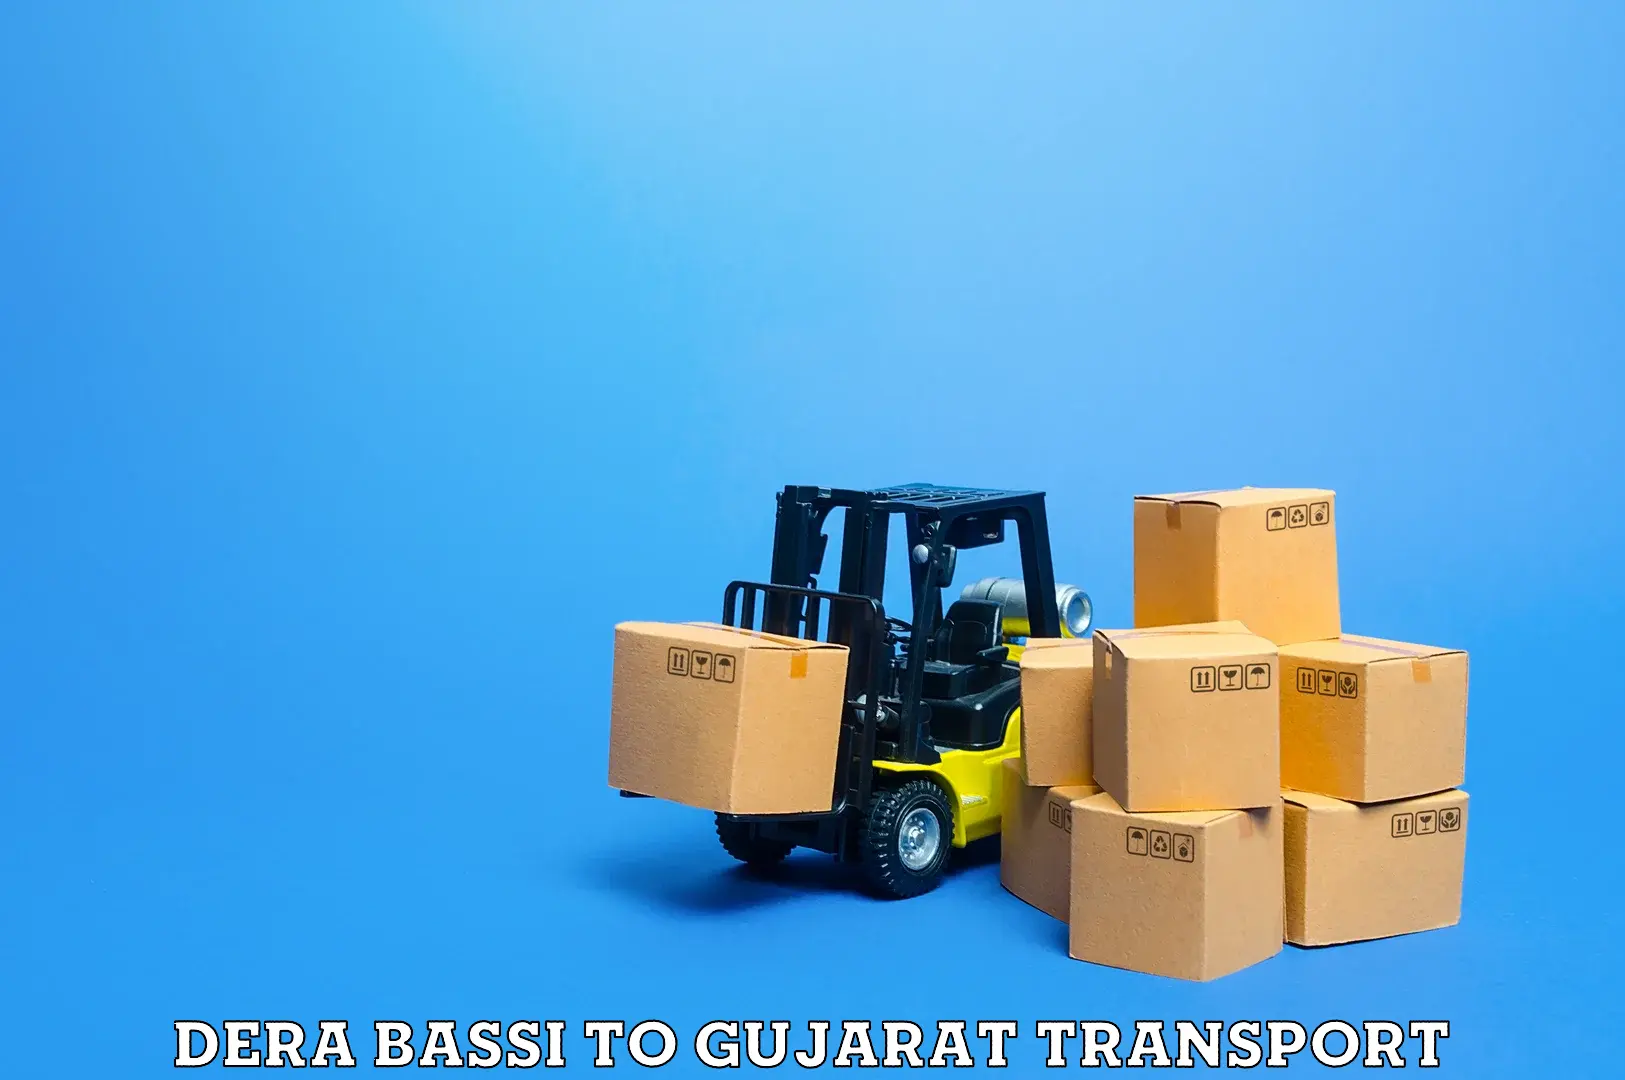 Sending bike to another city Dera Bassi to Gujarat